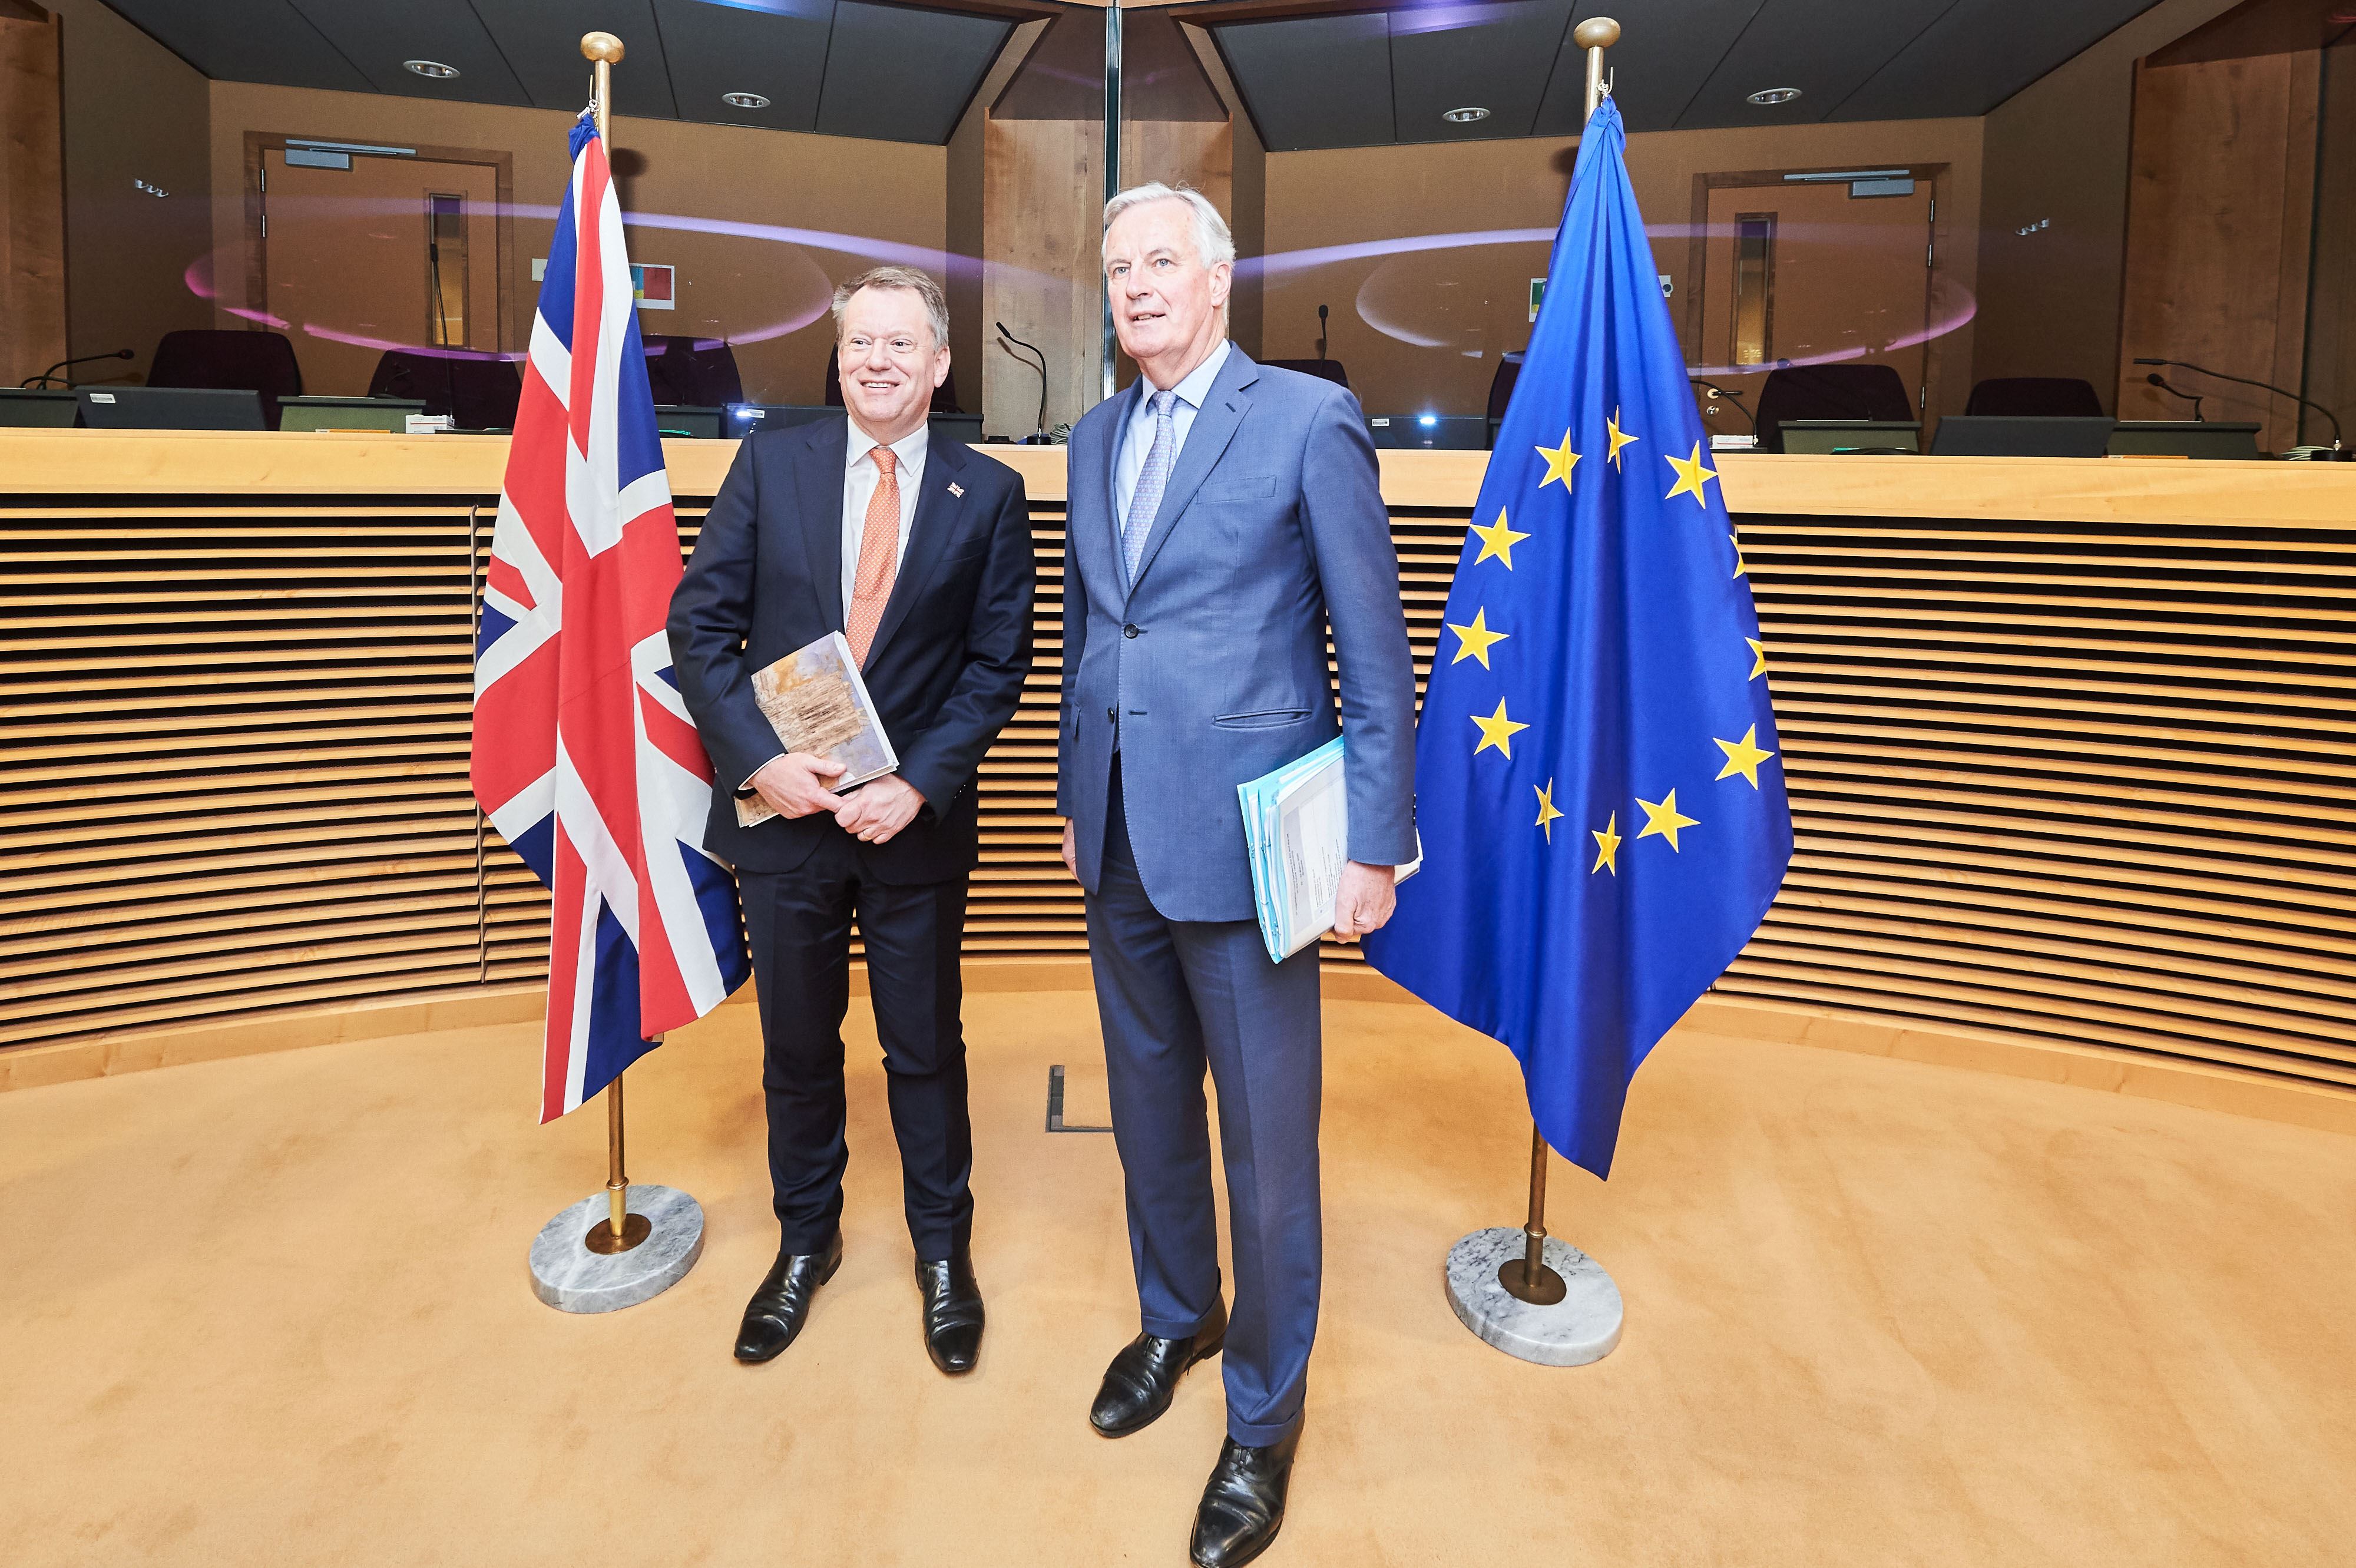 Britain insists European Union should shift position in post-Brexit trade talks